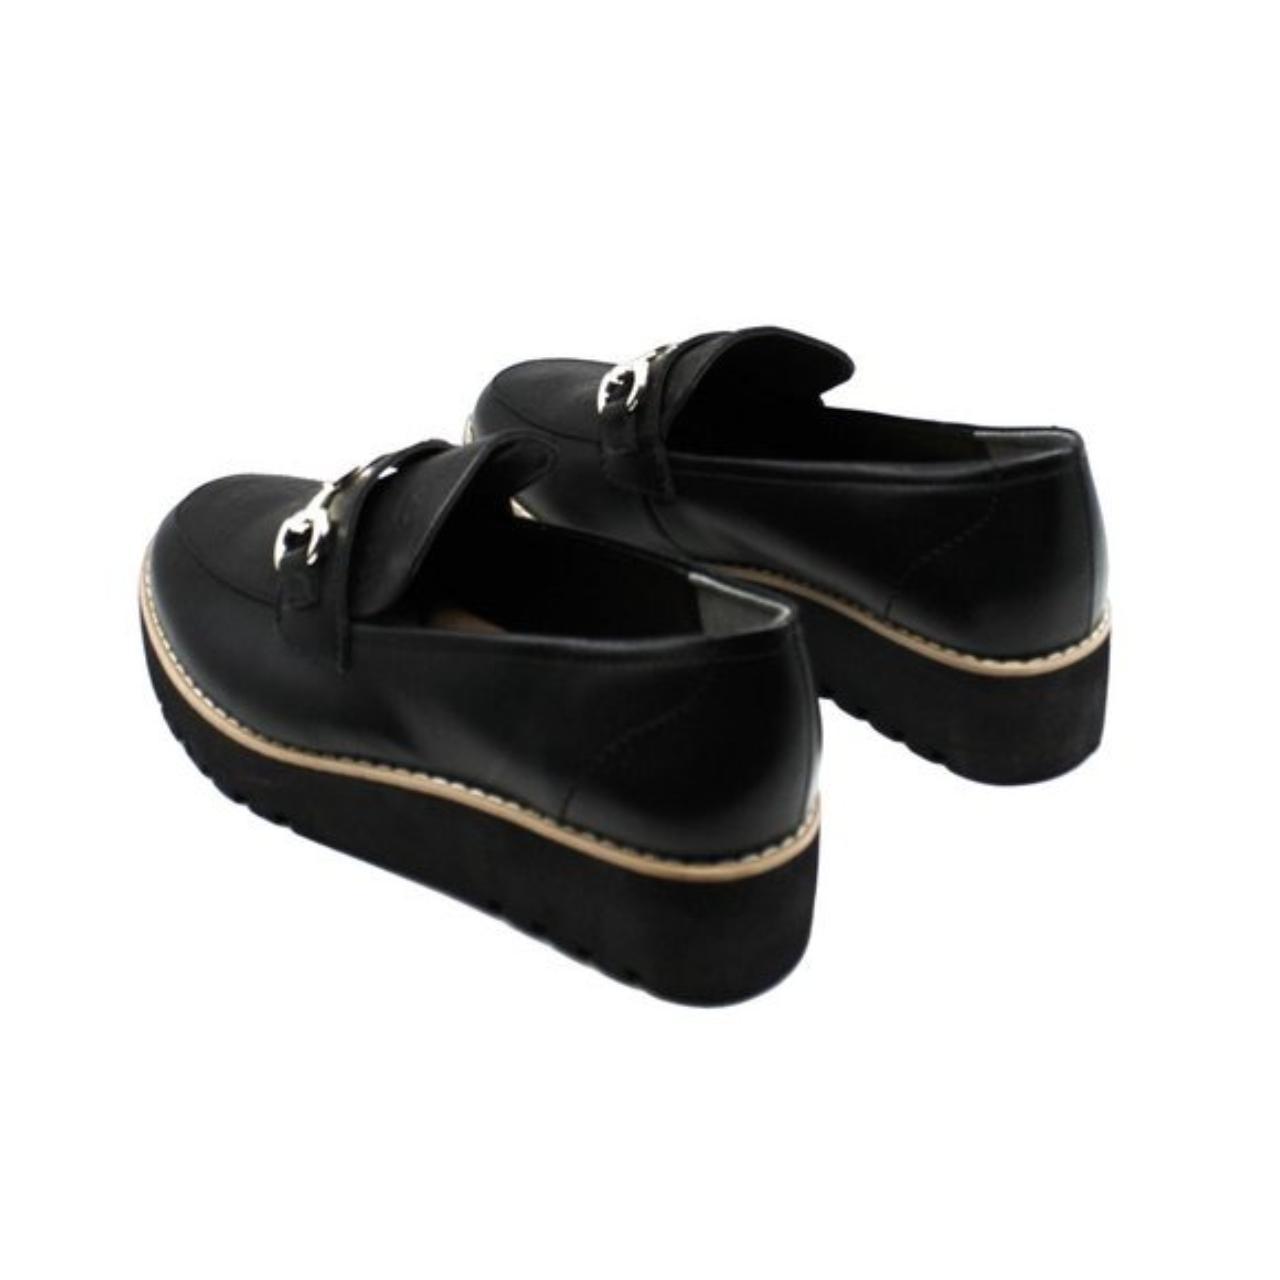 Giani Bernini black leather loafers driving shoes - Depop